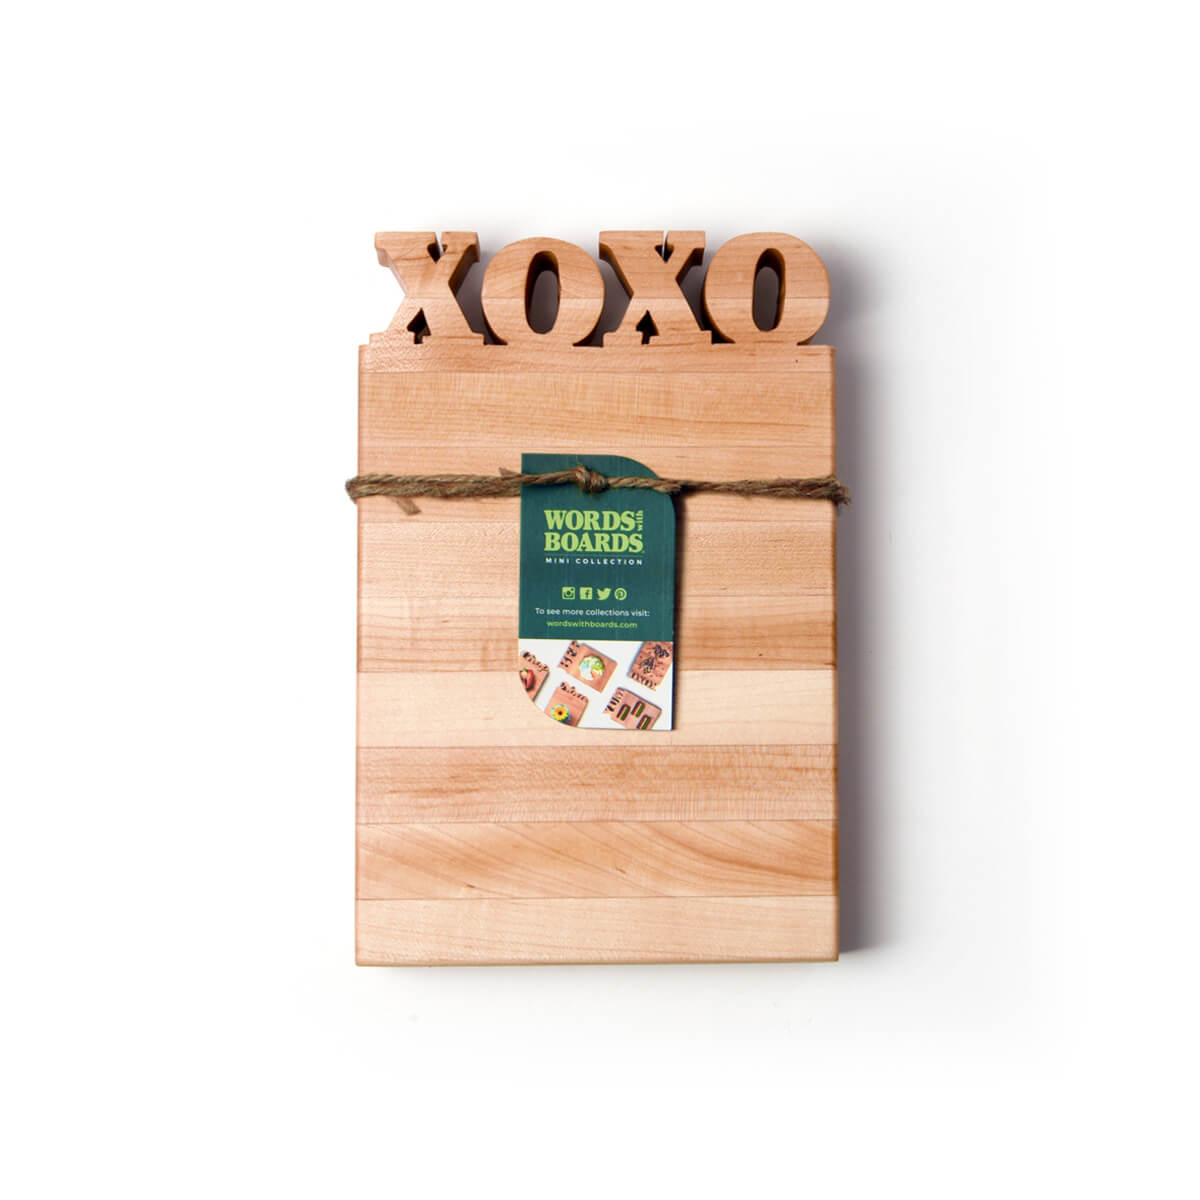 XOXO Cutting Board with food on it